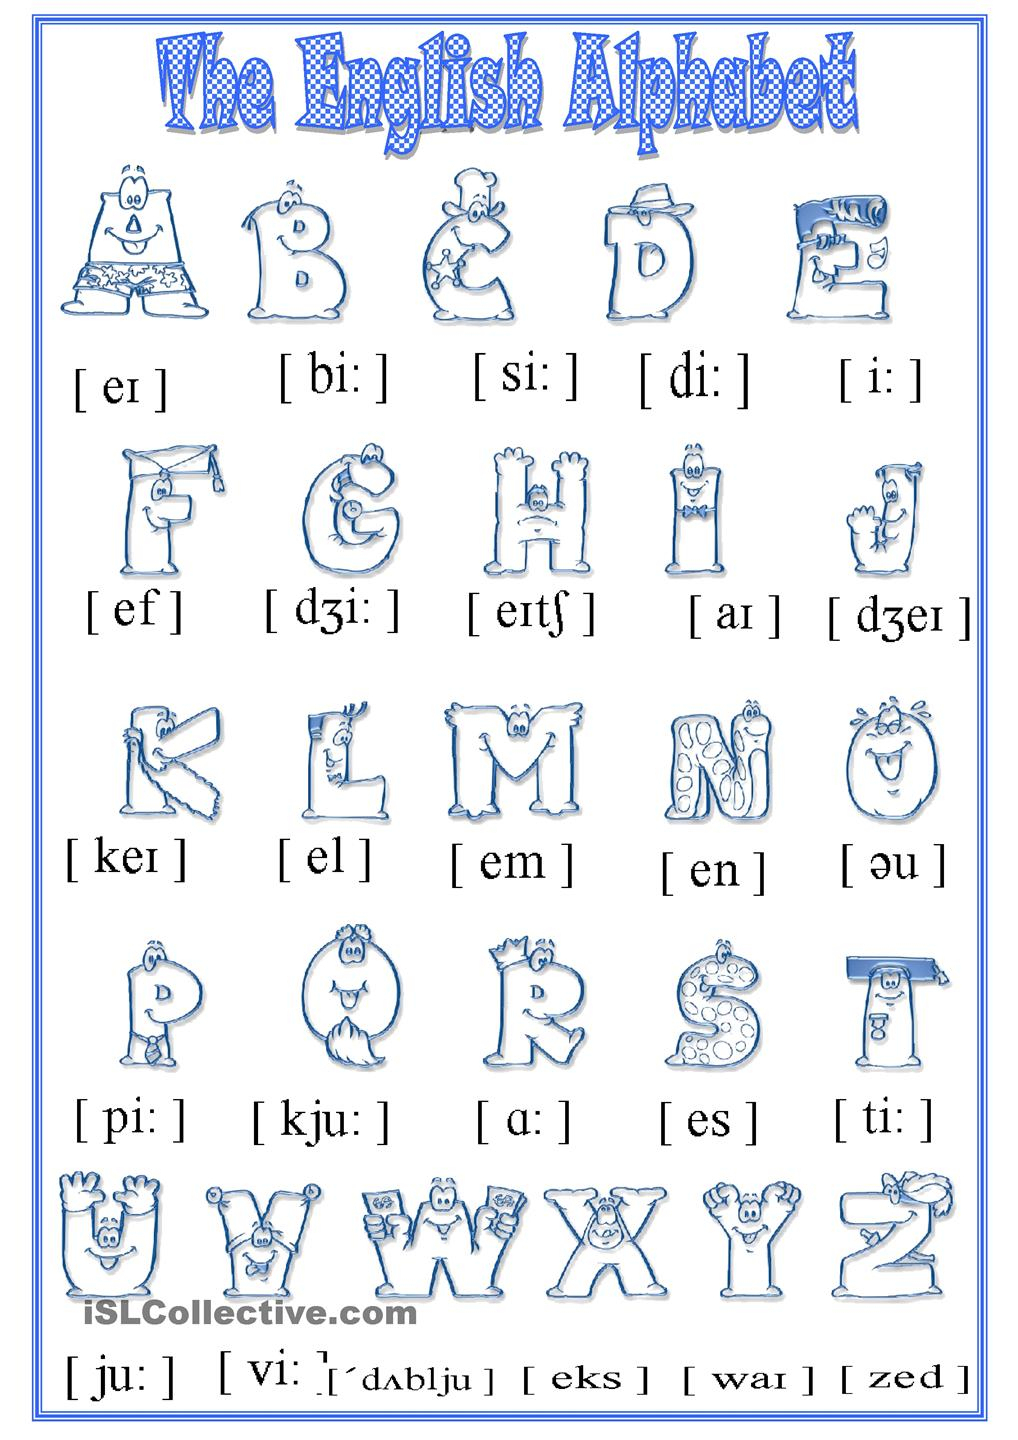 Spanish Alphabet Worksheet Printable - Photos Alphabet Collections - Free Printable Spanish Alphabet Worksheets